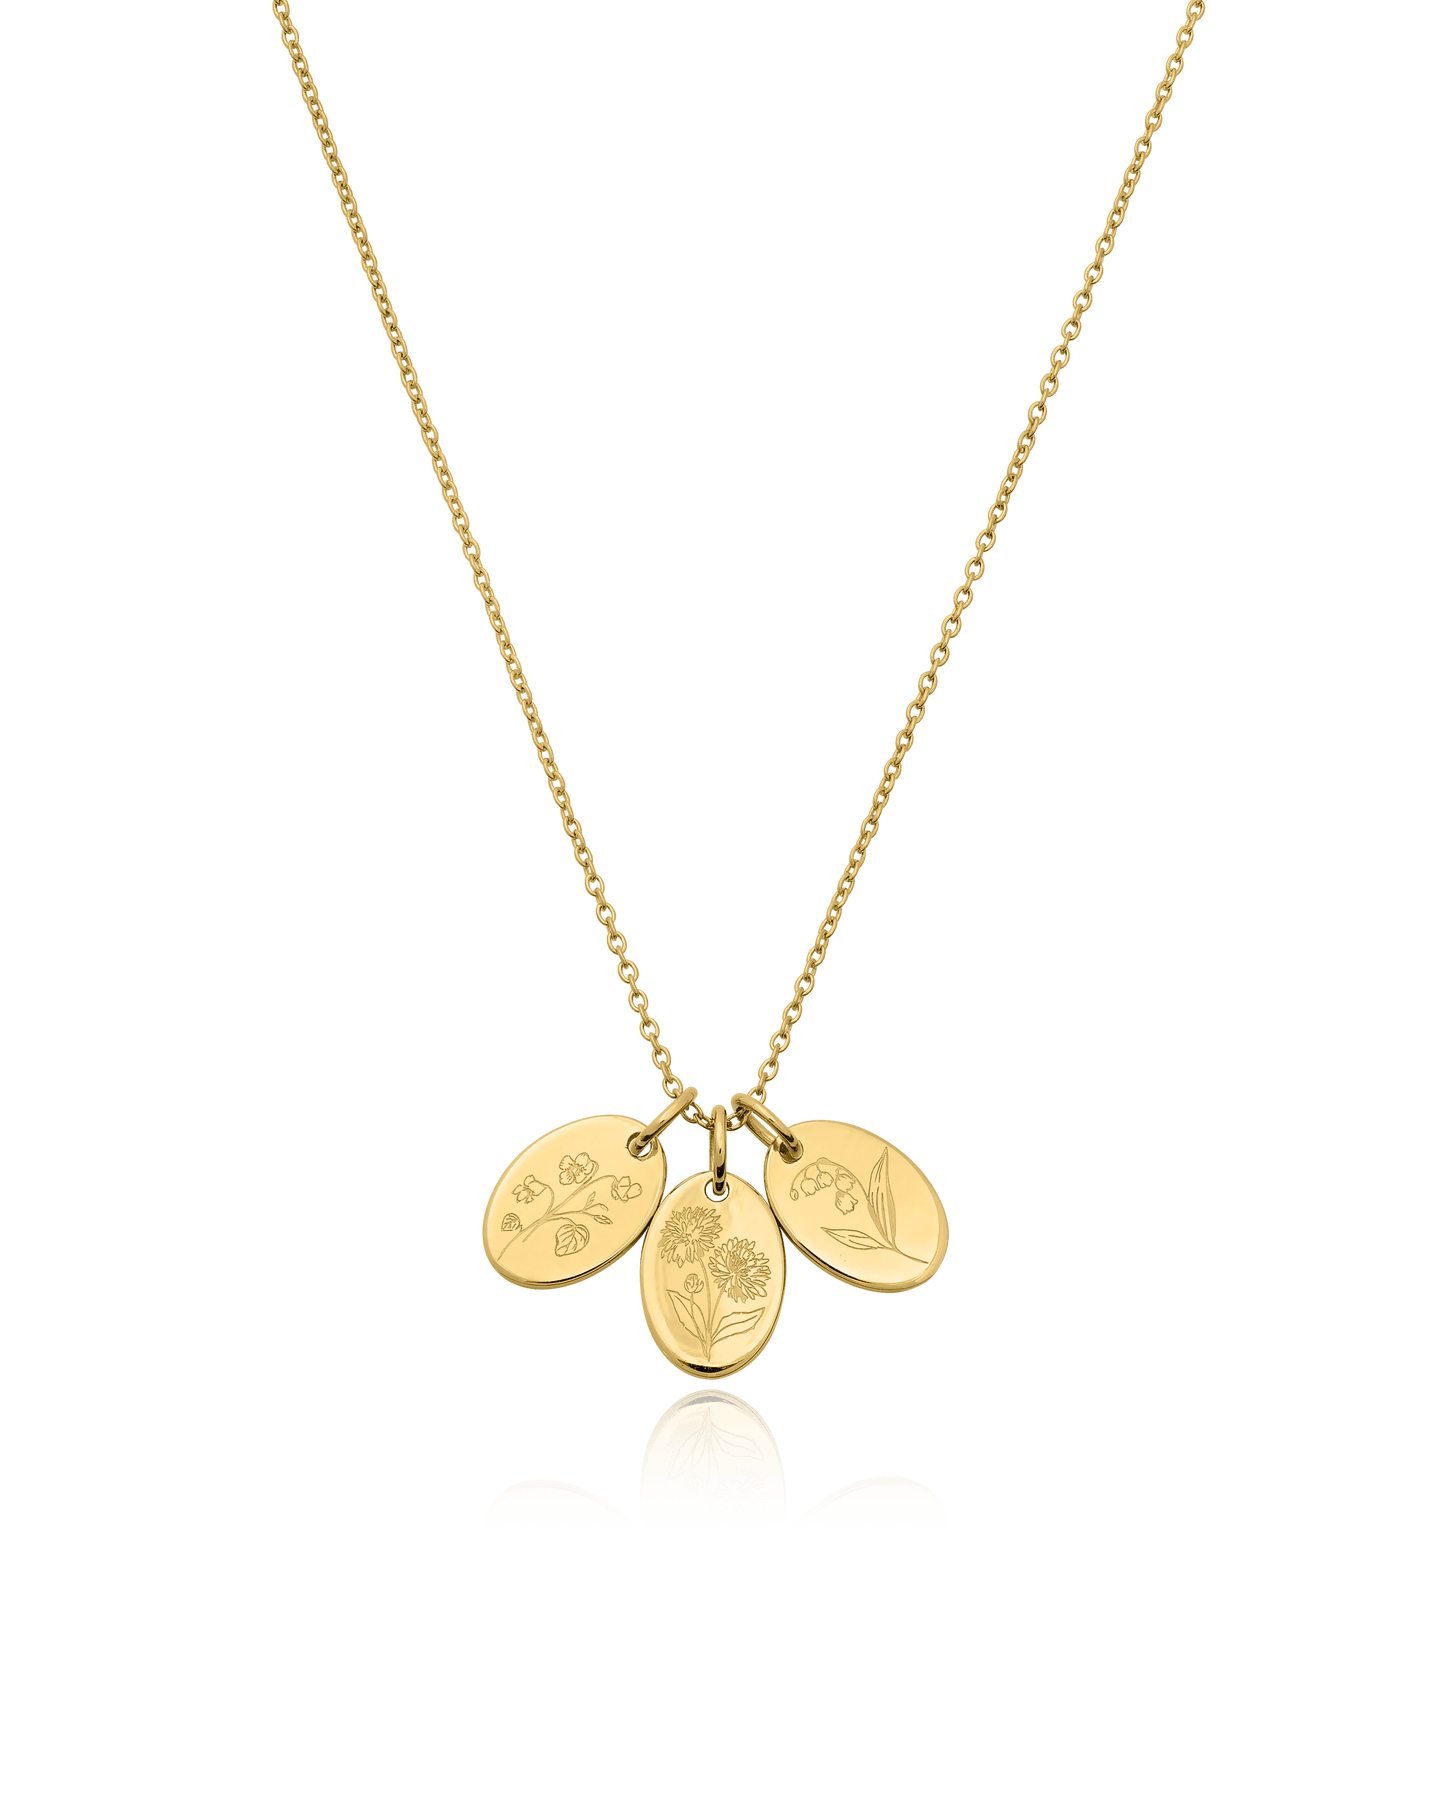 Flower Necklace - 18K Gold Vermeil Necklaces magal-dev 1 Tag 16” 